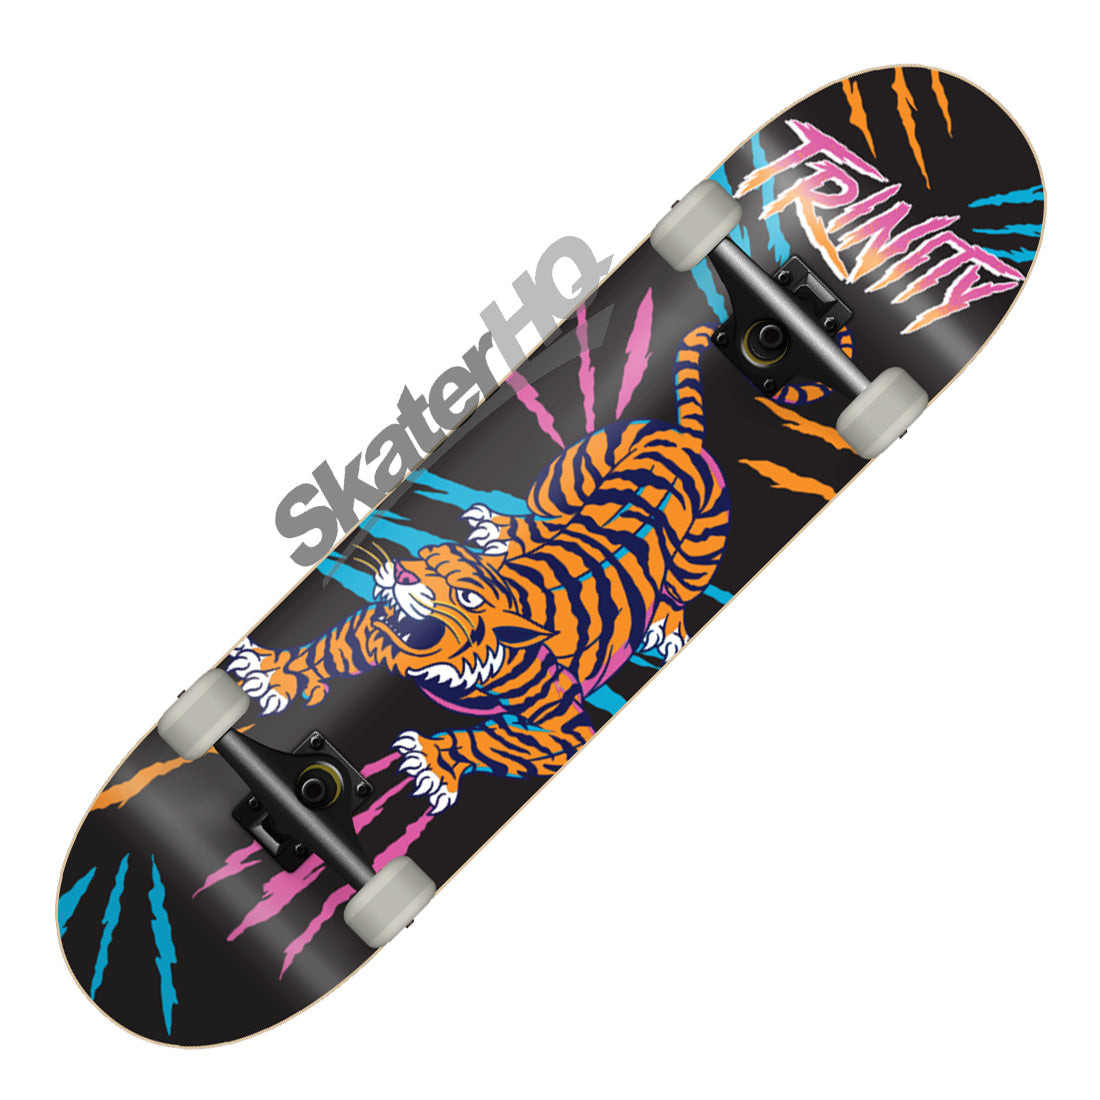 Trinity Tiger Black Neon 7.75 Complete Skateboard Completes Modern Street